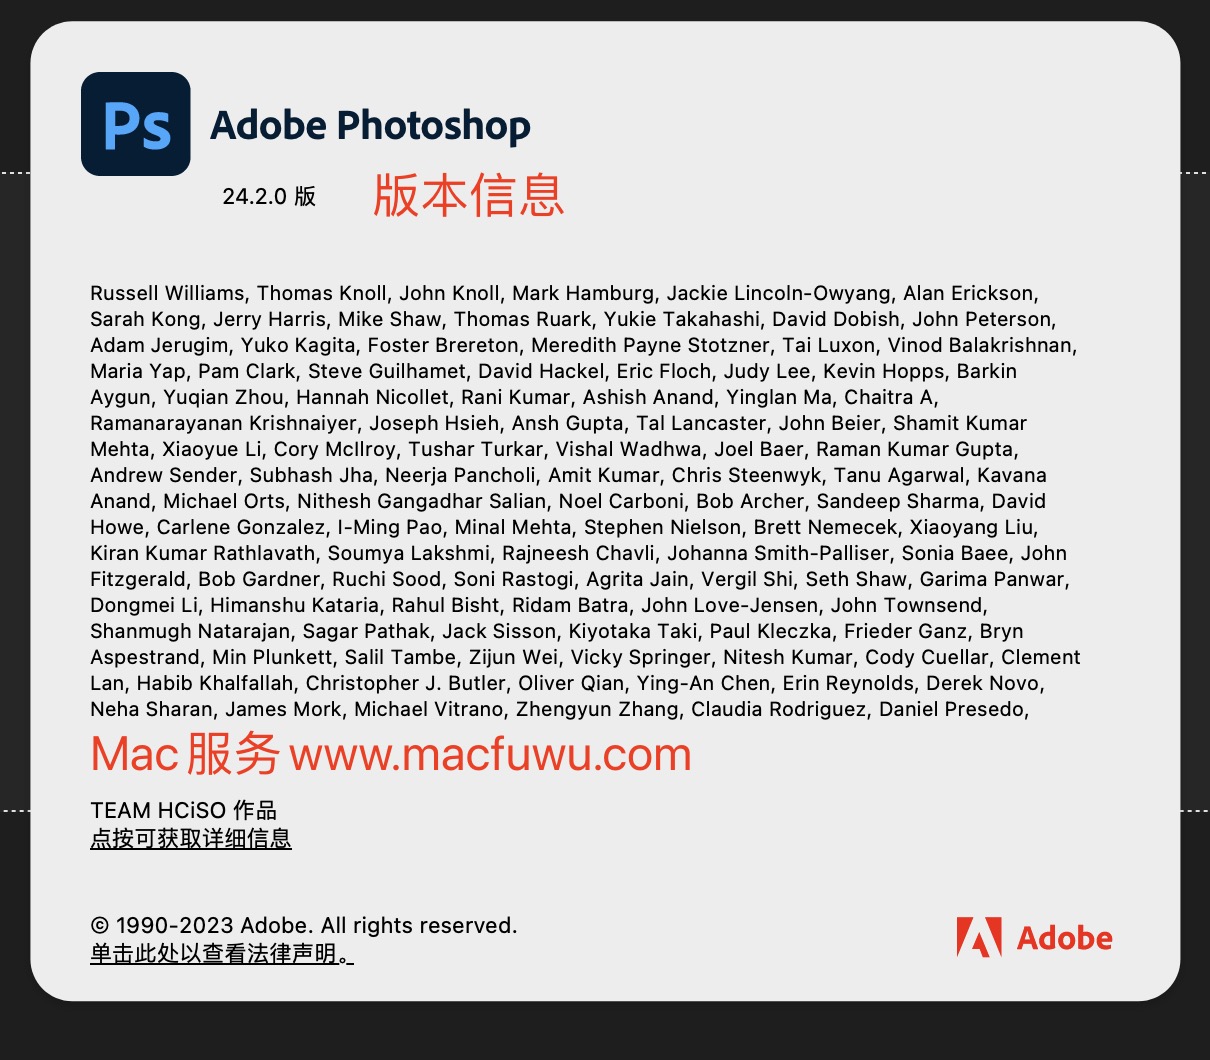 Adobe Photoshop 2023 for Mac